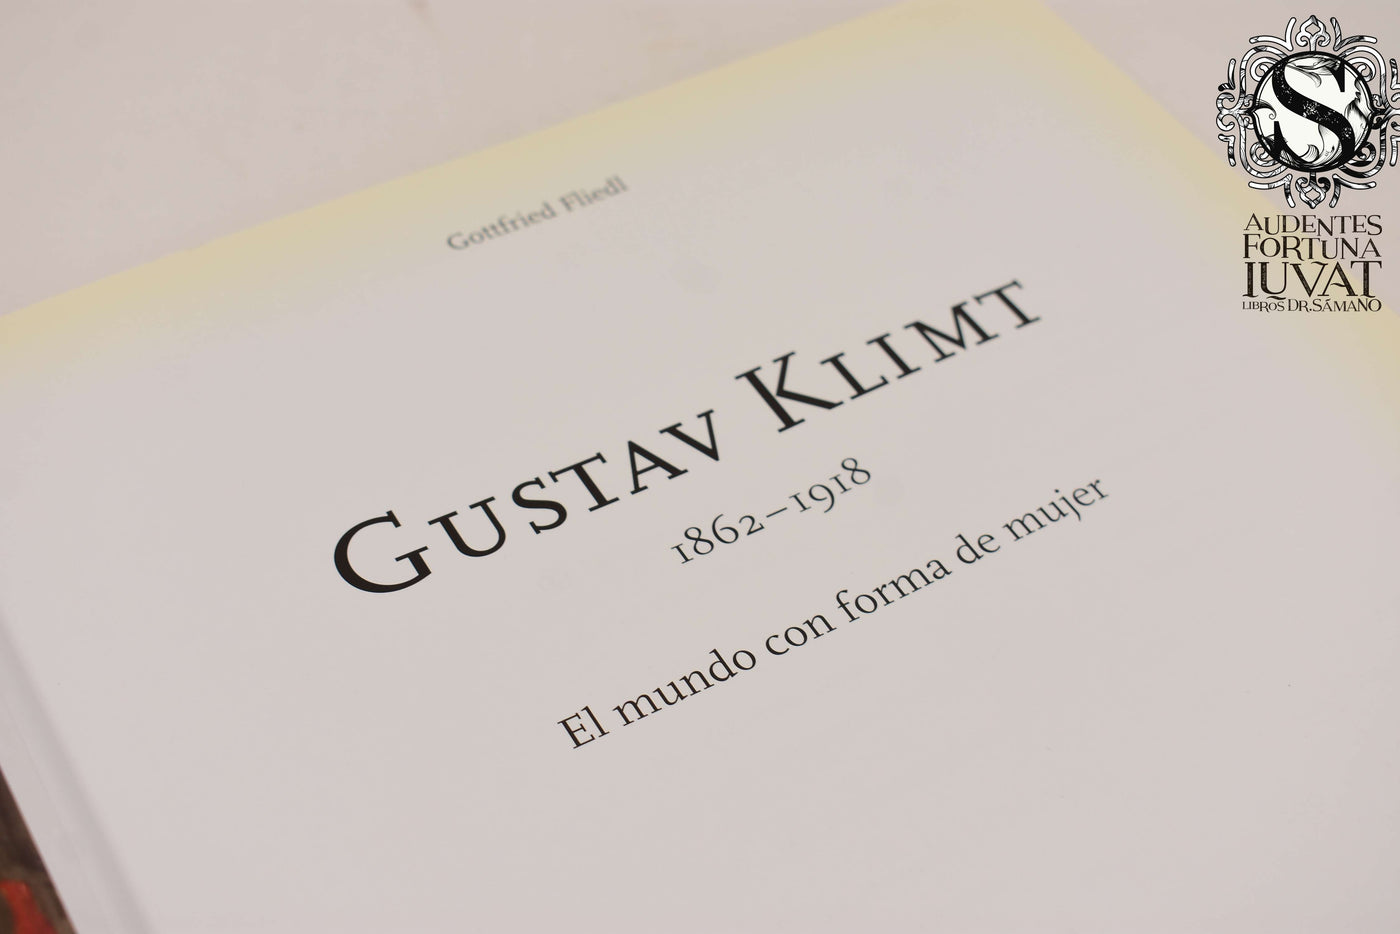 Gustav Klimt - GOTTFRIED FLIED